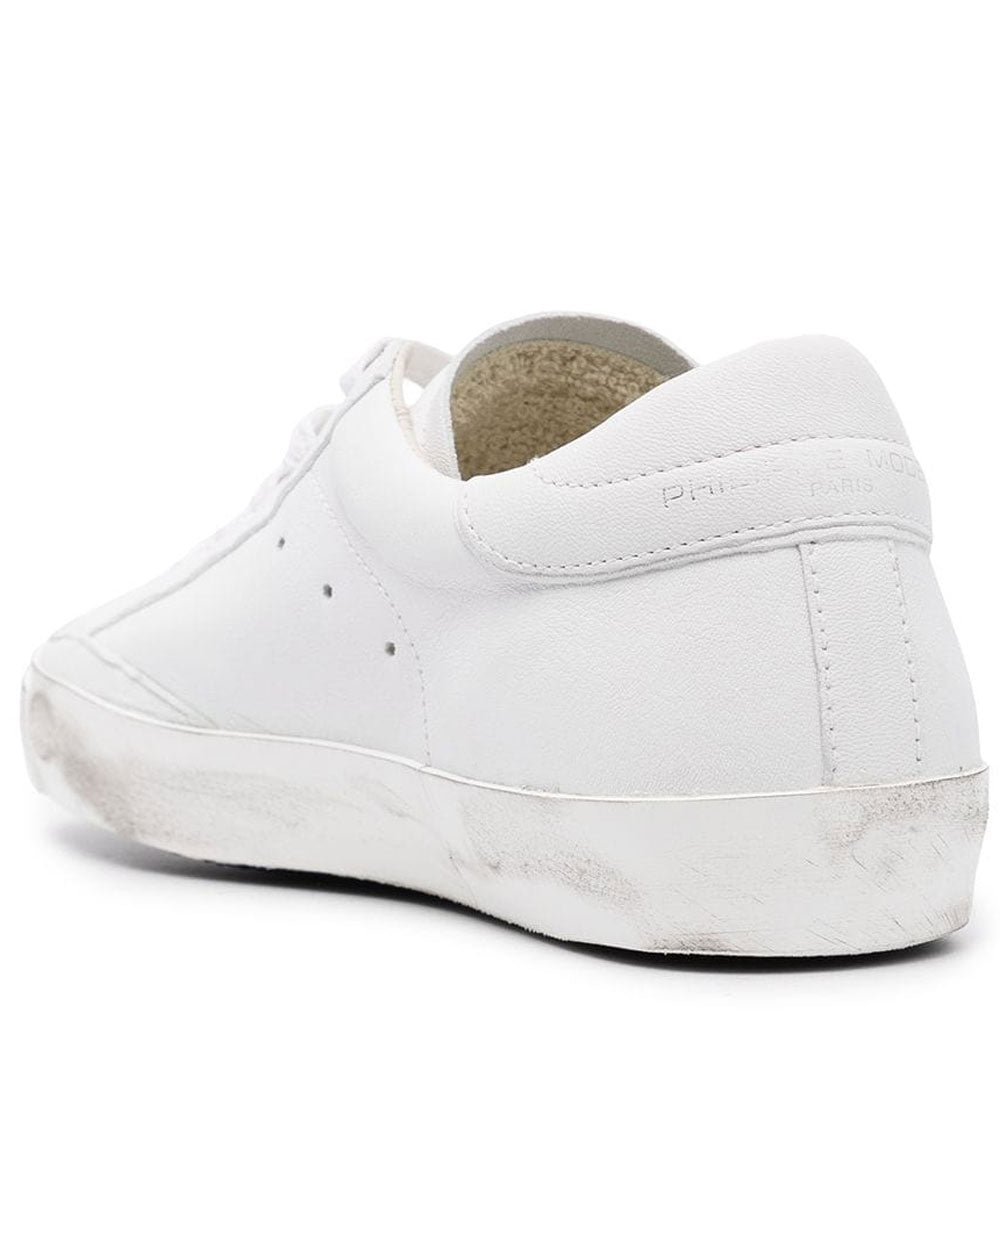 PRSX Low Basic Sneaker in Blanc